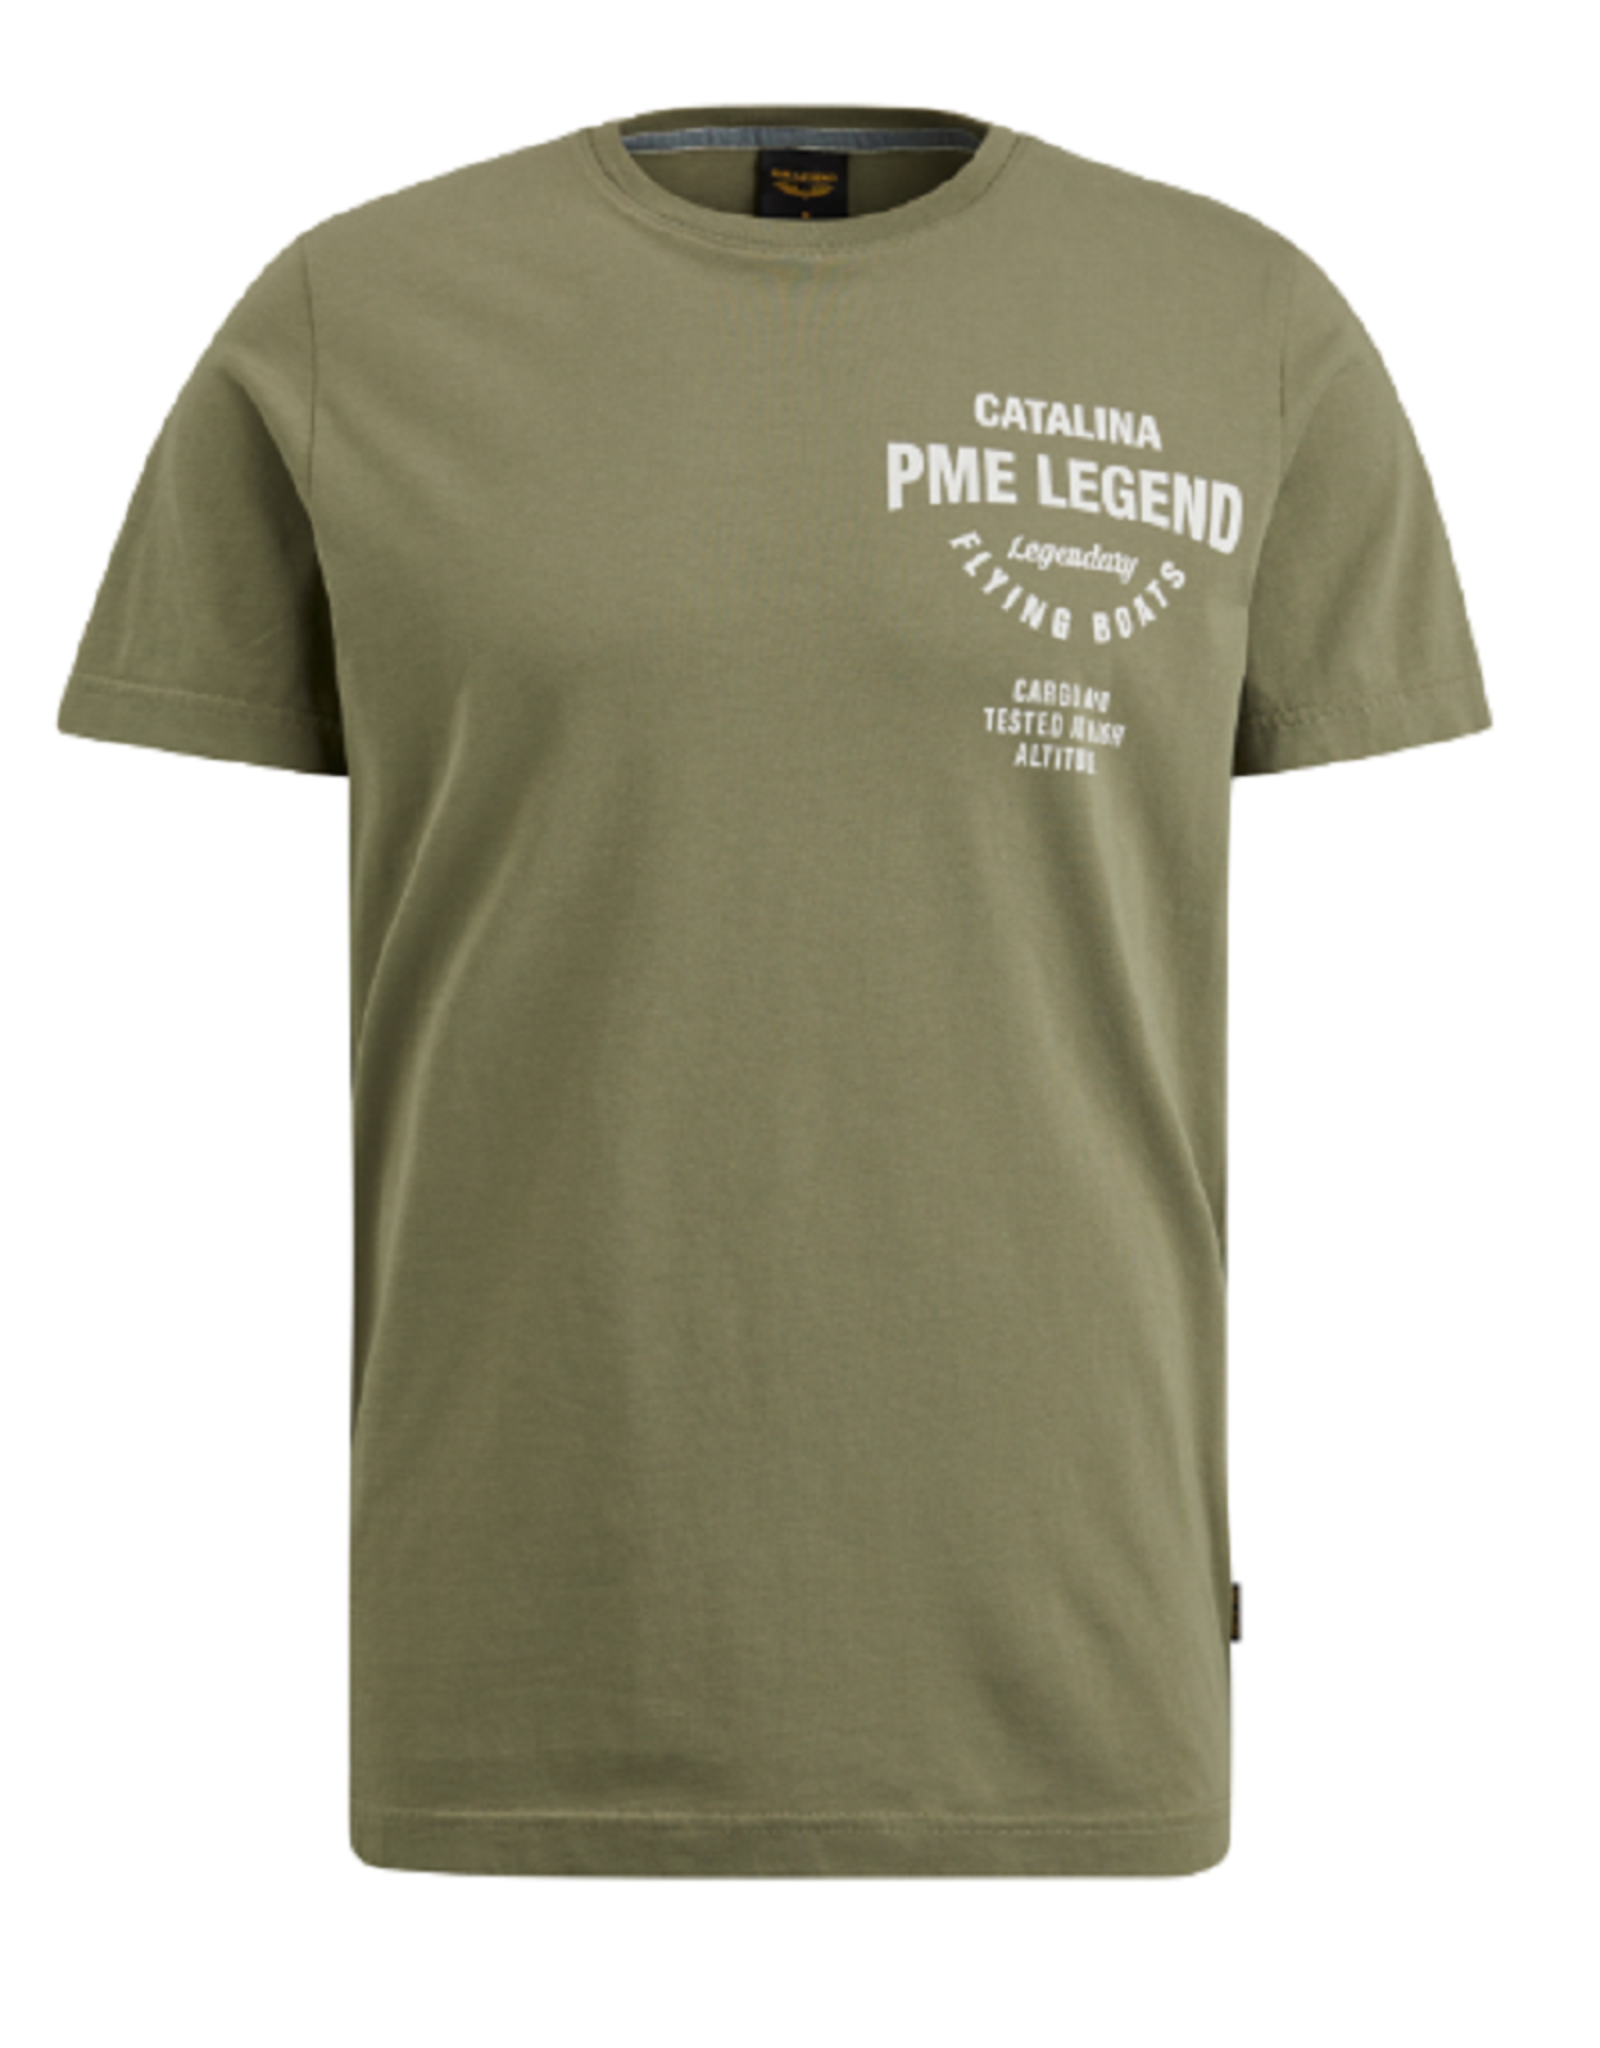 PME Legend PME Legend t-shirt Catalina groen